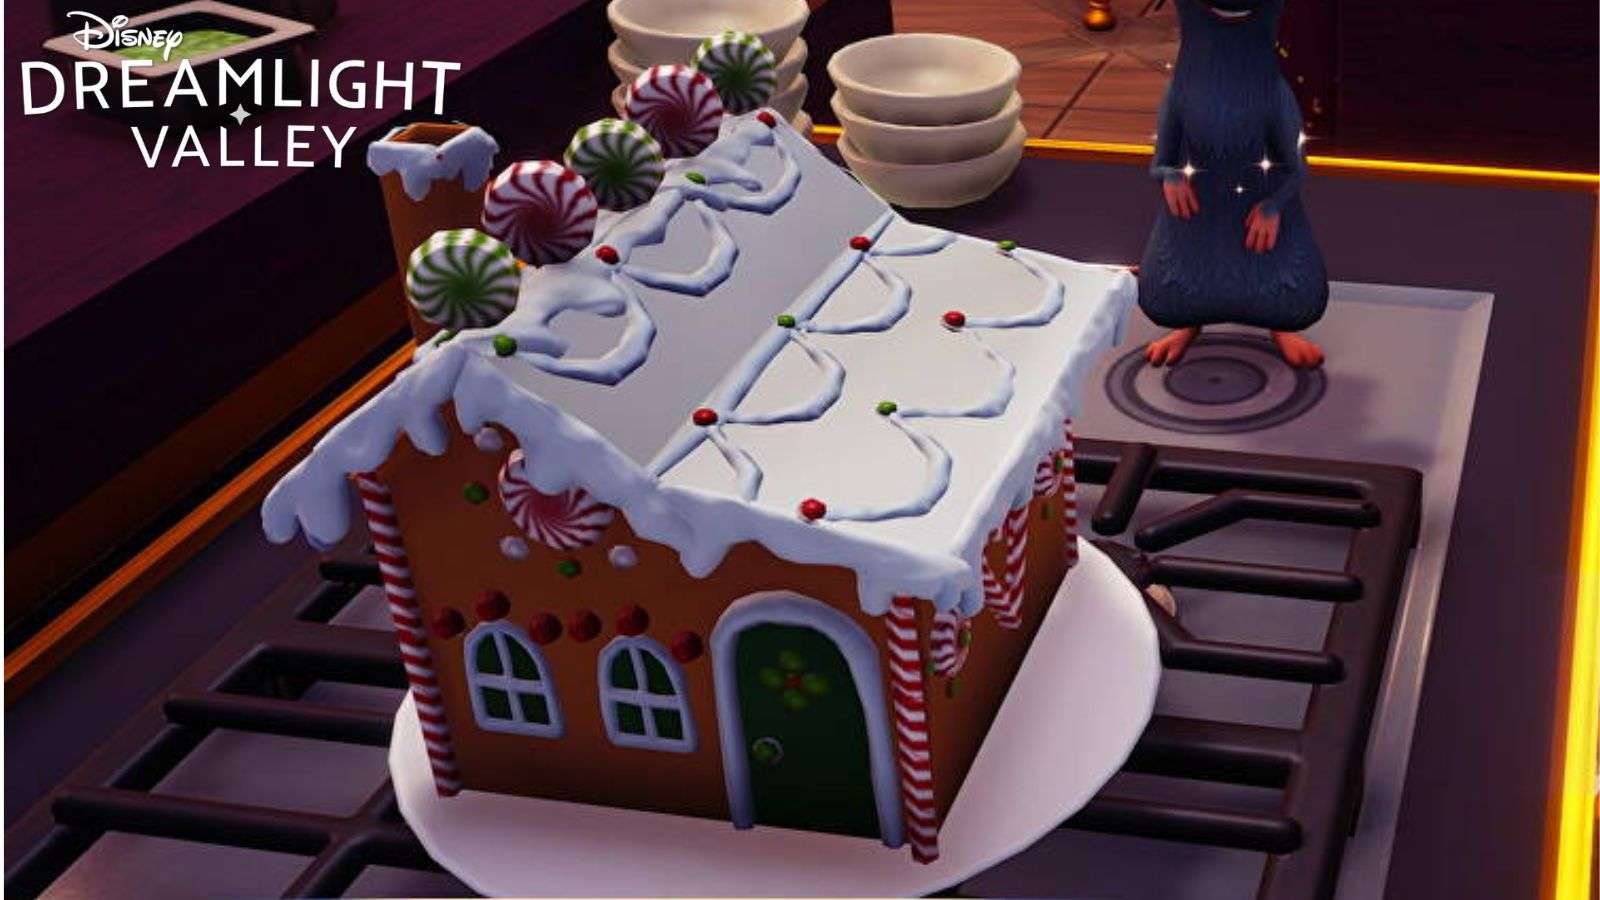 Disney Dreamlight Valley Gingerbread house recipe